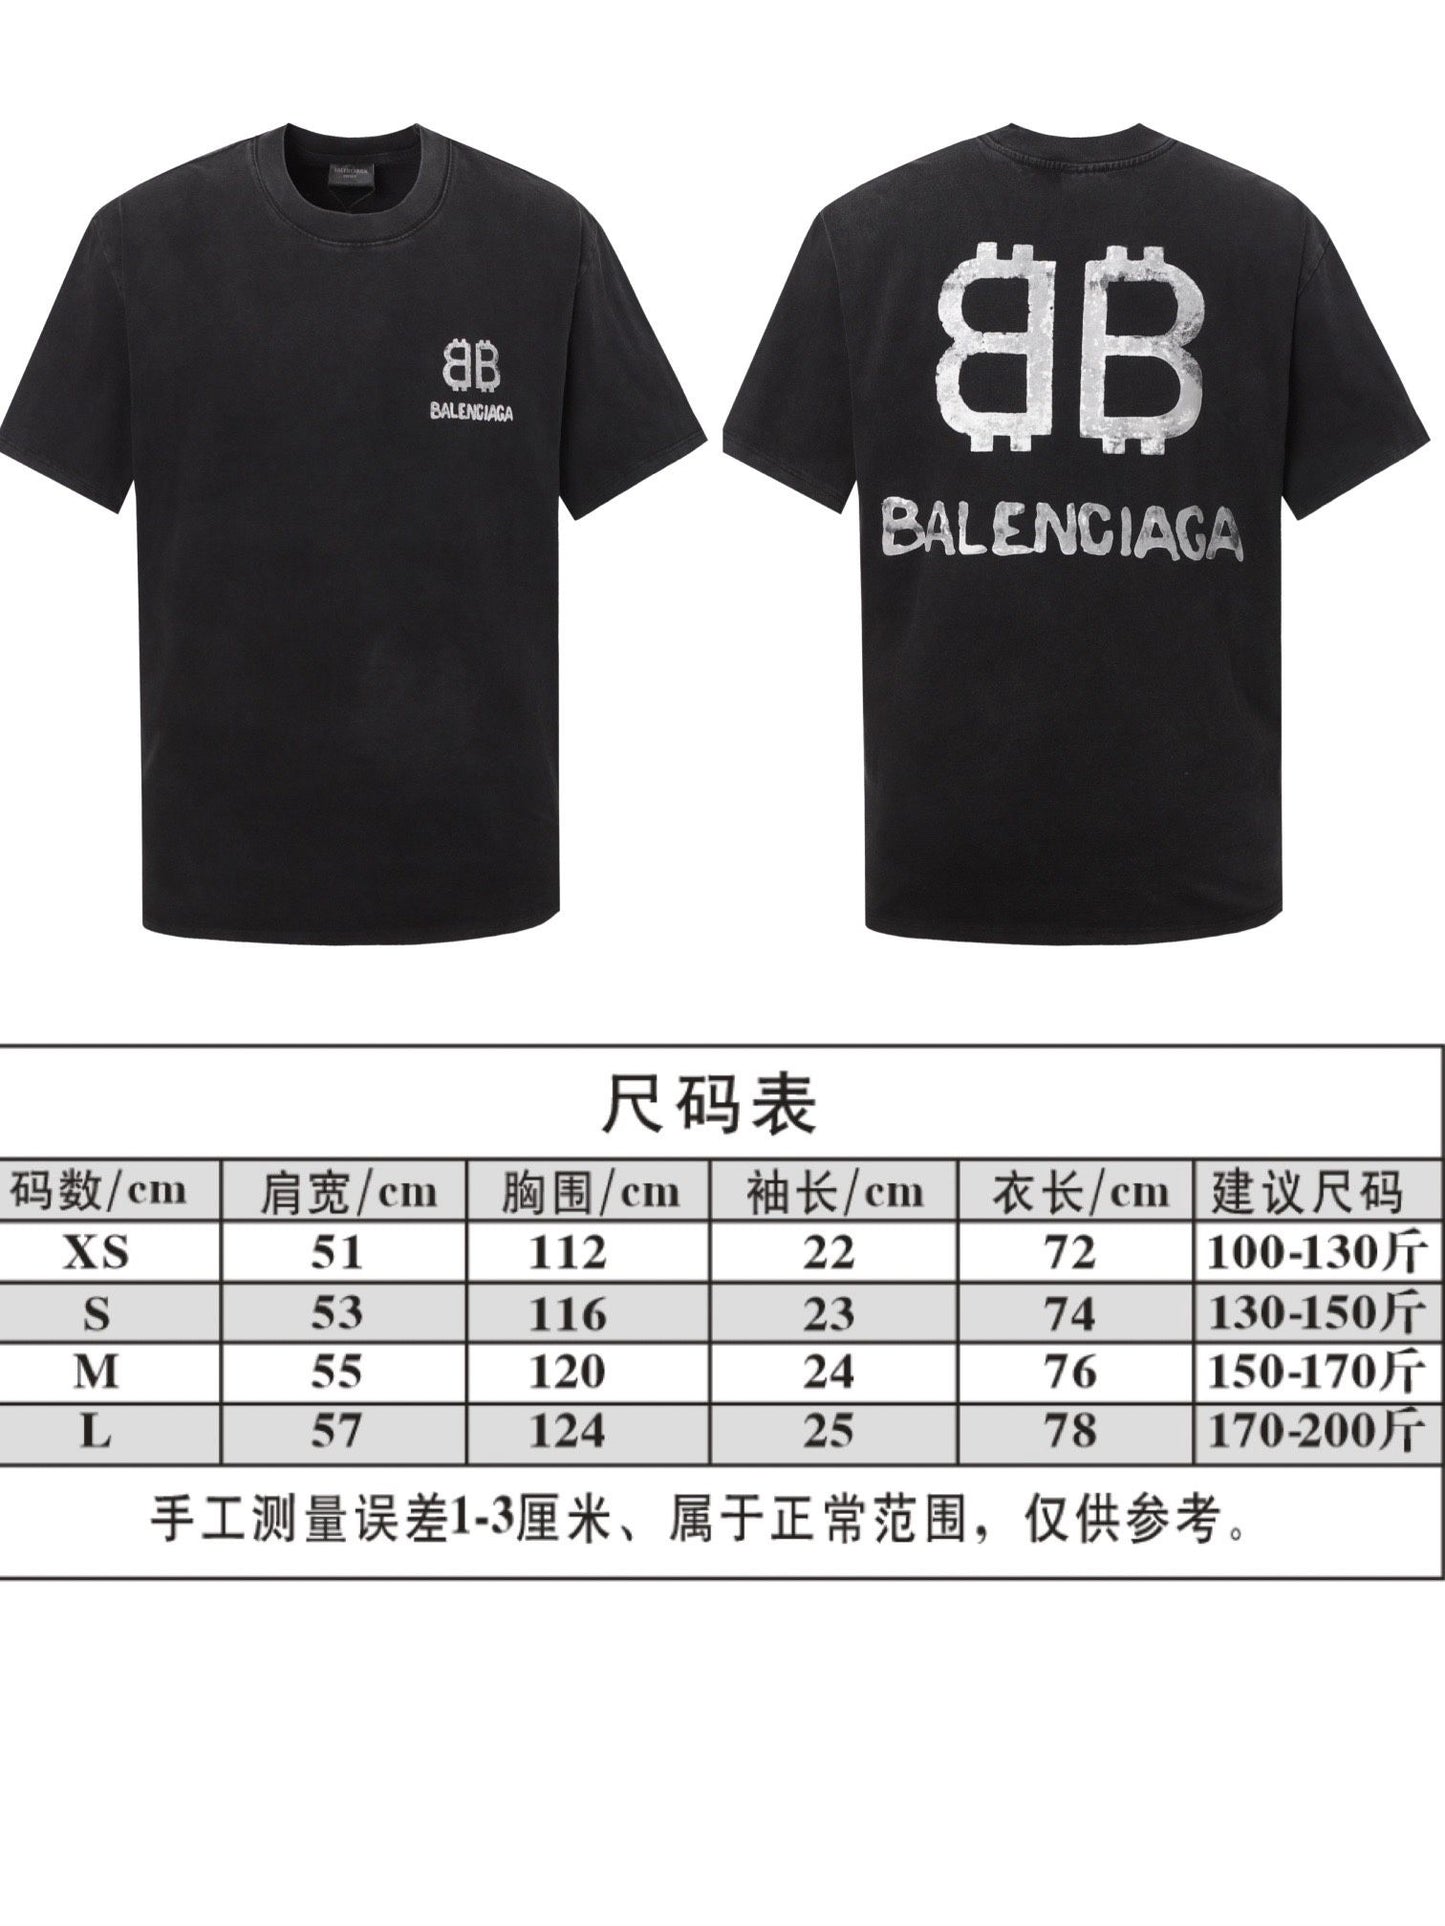 Balenciaga T-Shirt 24